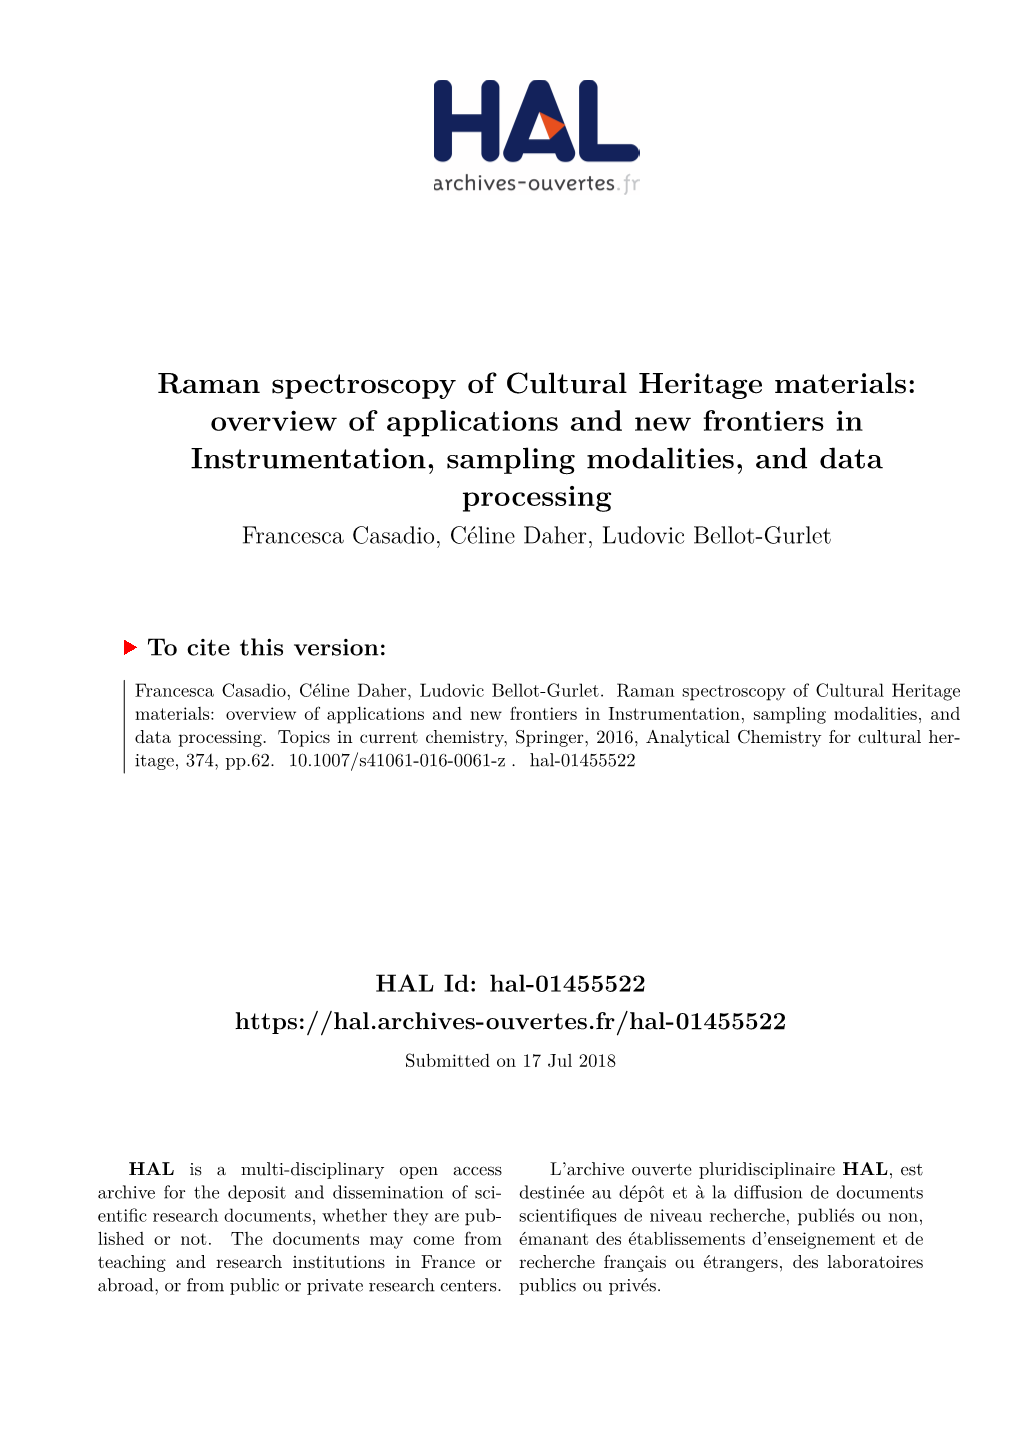 Raman Spectroscopy of Cultural Heritage